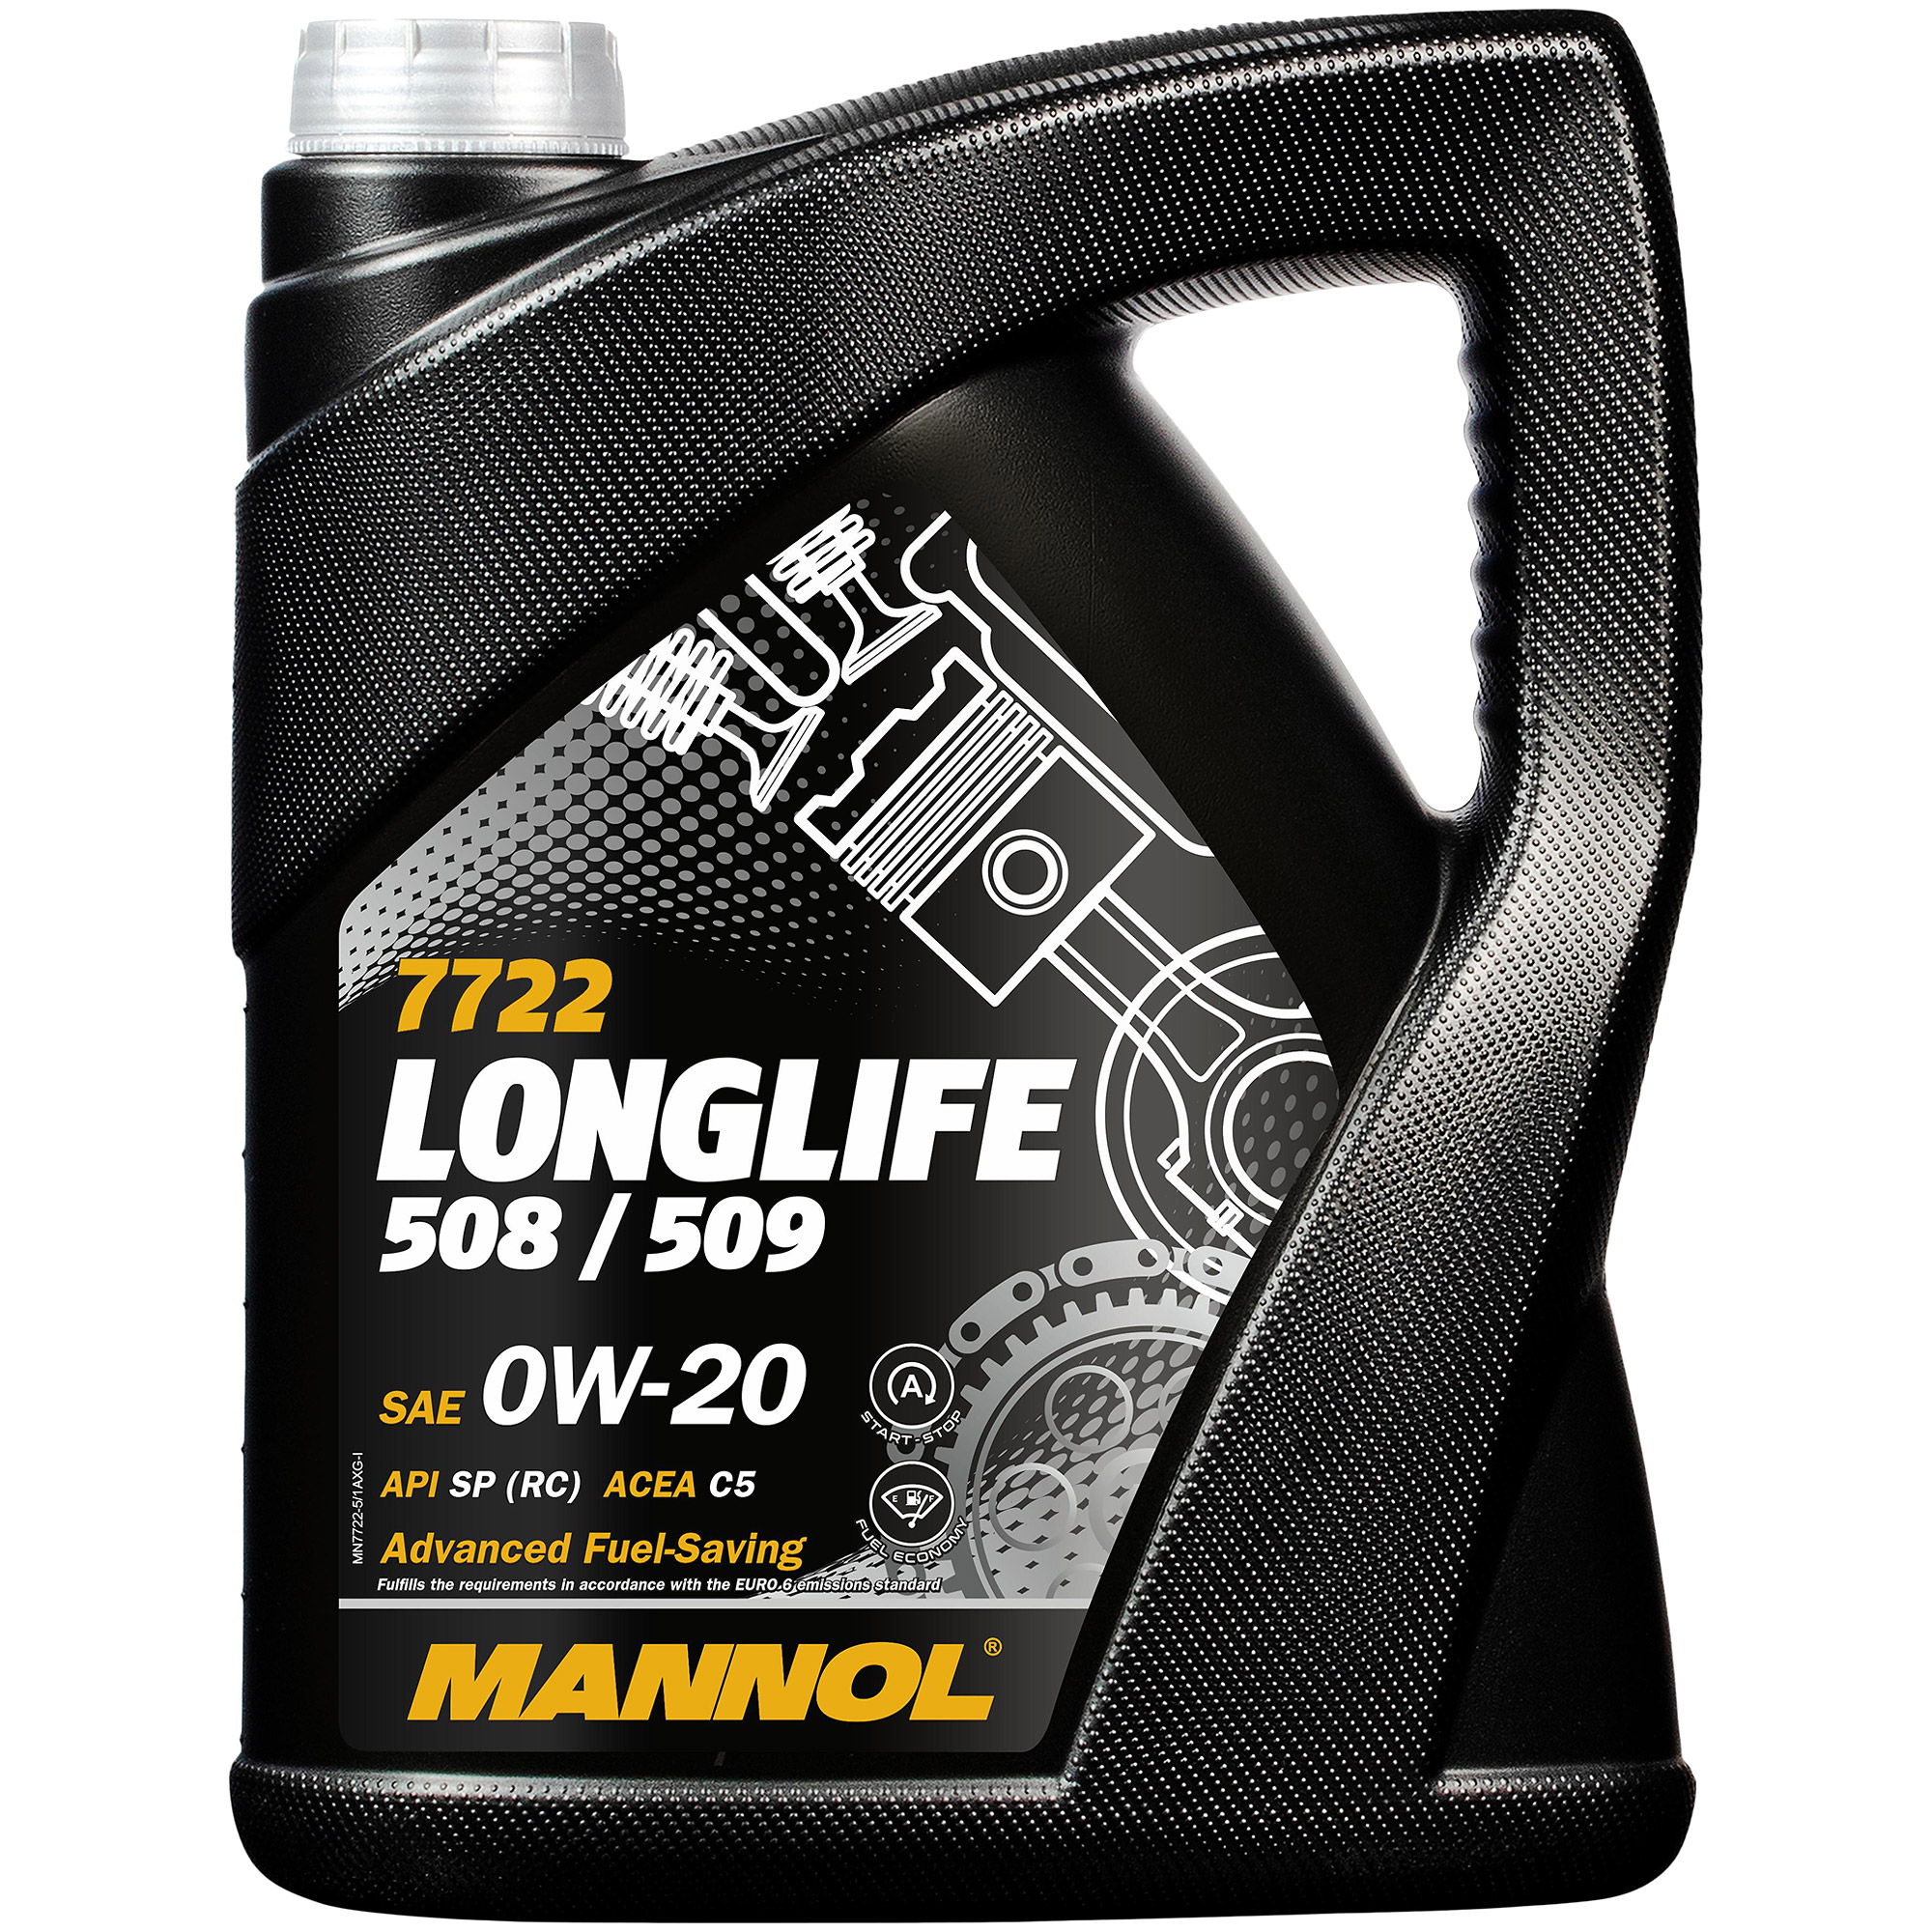 5 Liter MANNOL 7722 Longlife 508/509 0W-20 Motoröl Engine Oil